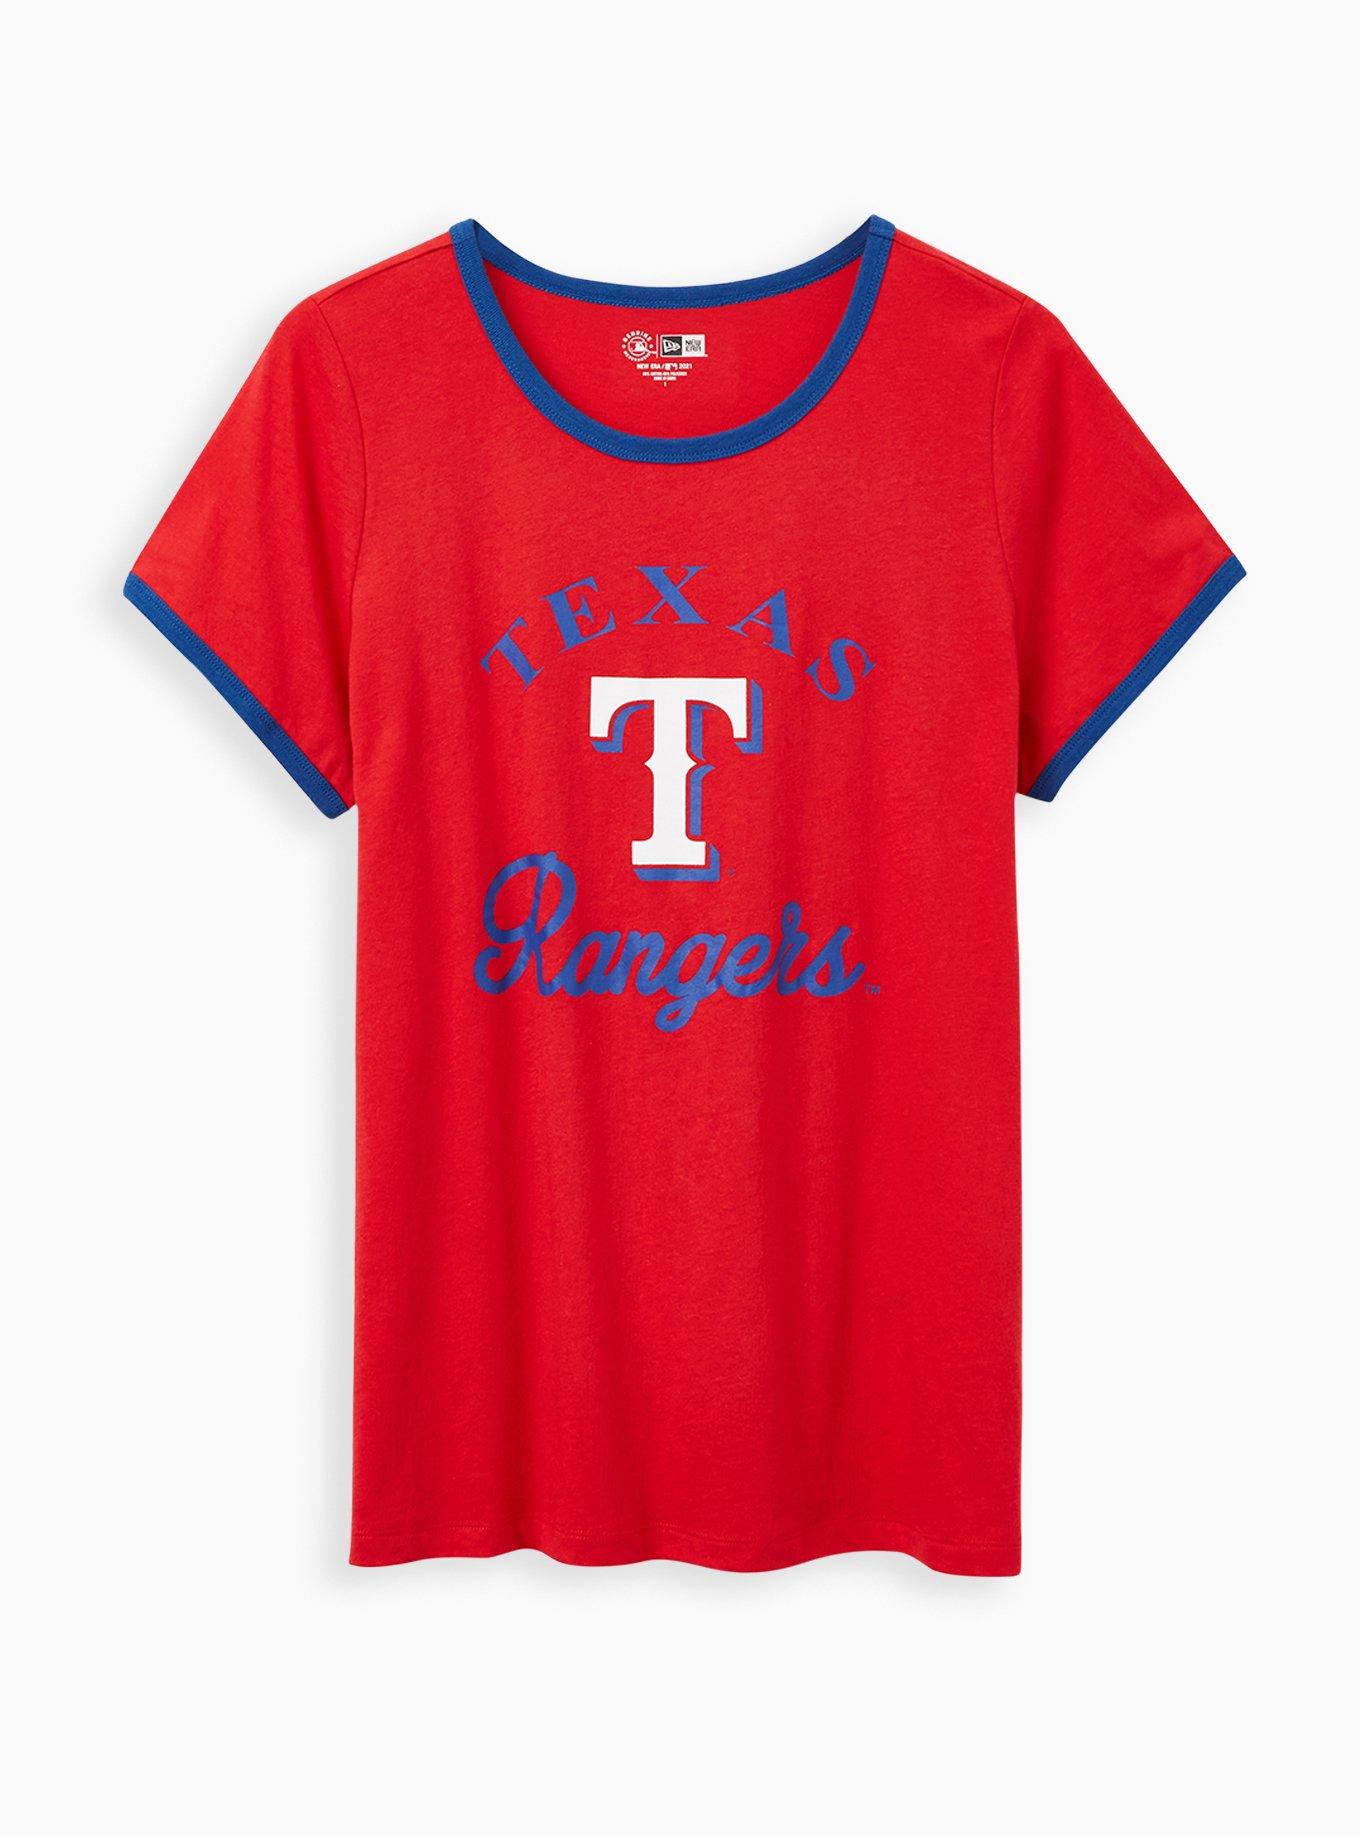 Plus Size - MLB Texas Rangers Blue Classic Fit Raglan Tee - Torrid